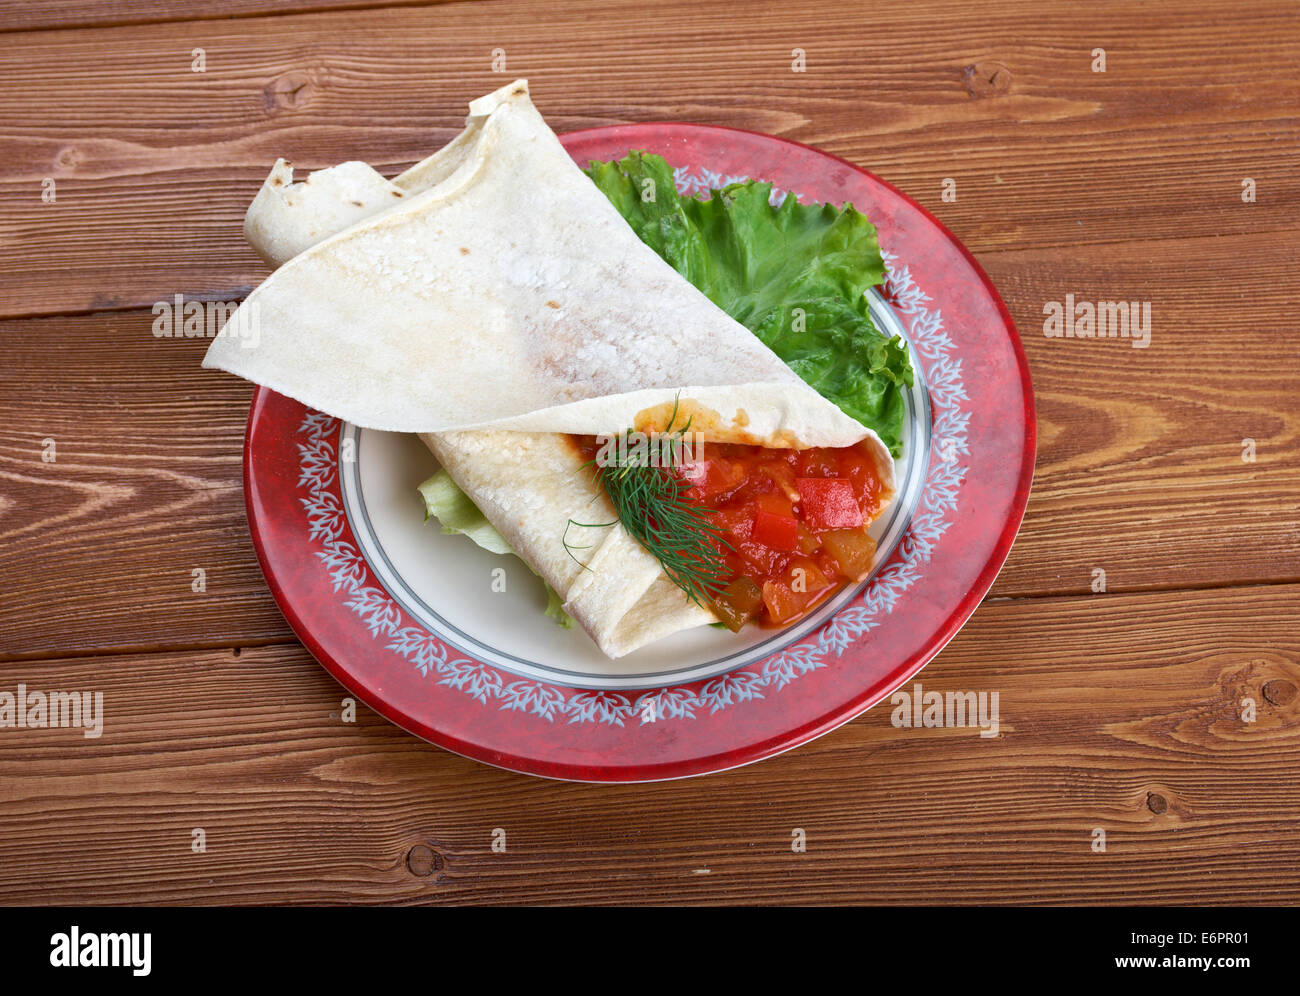 Matbucha with pita. breakfast Maghreb Stock Photo